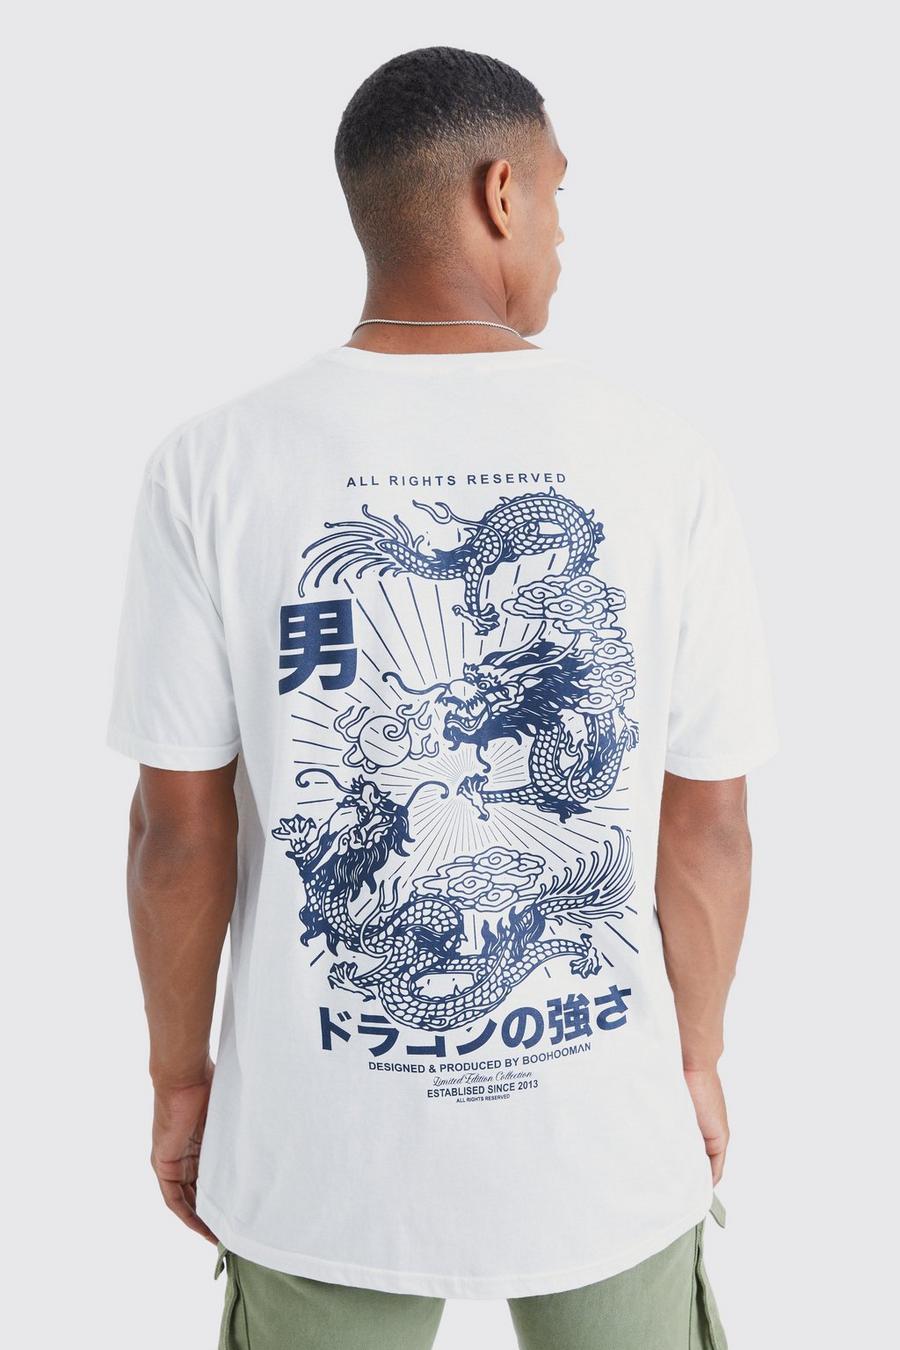 Men's Graphic T-Shirts, Printed T-Shirts